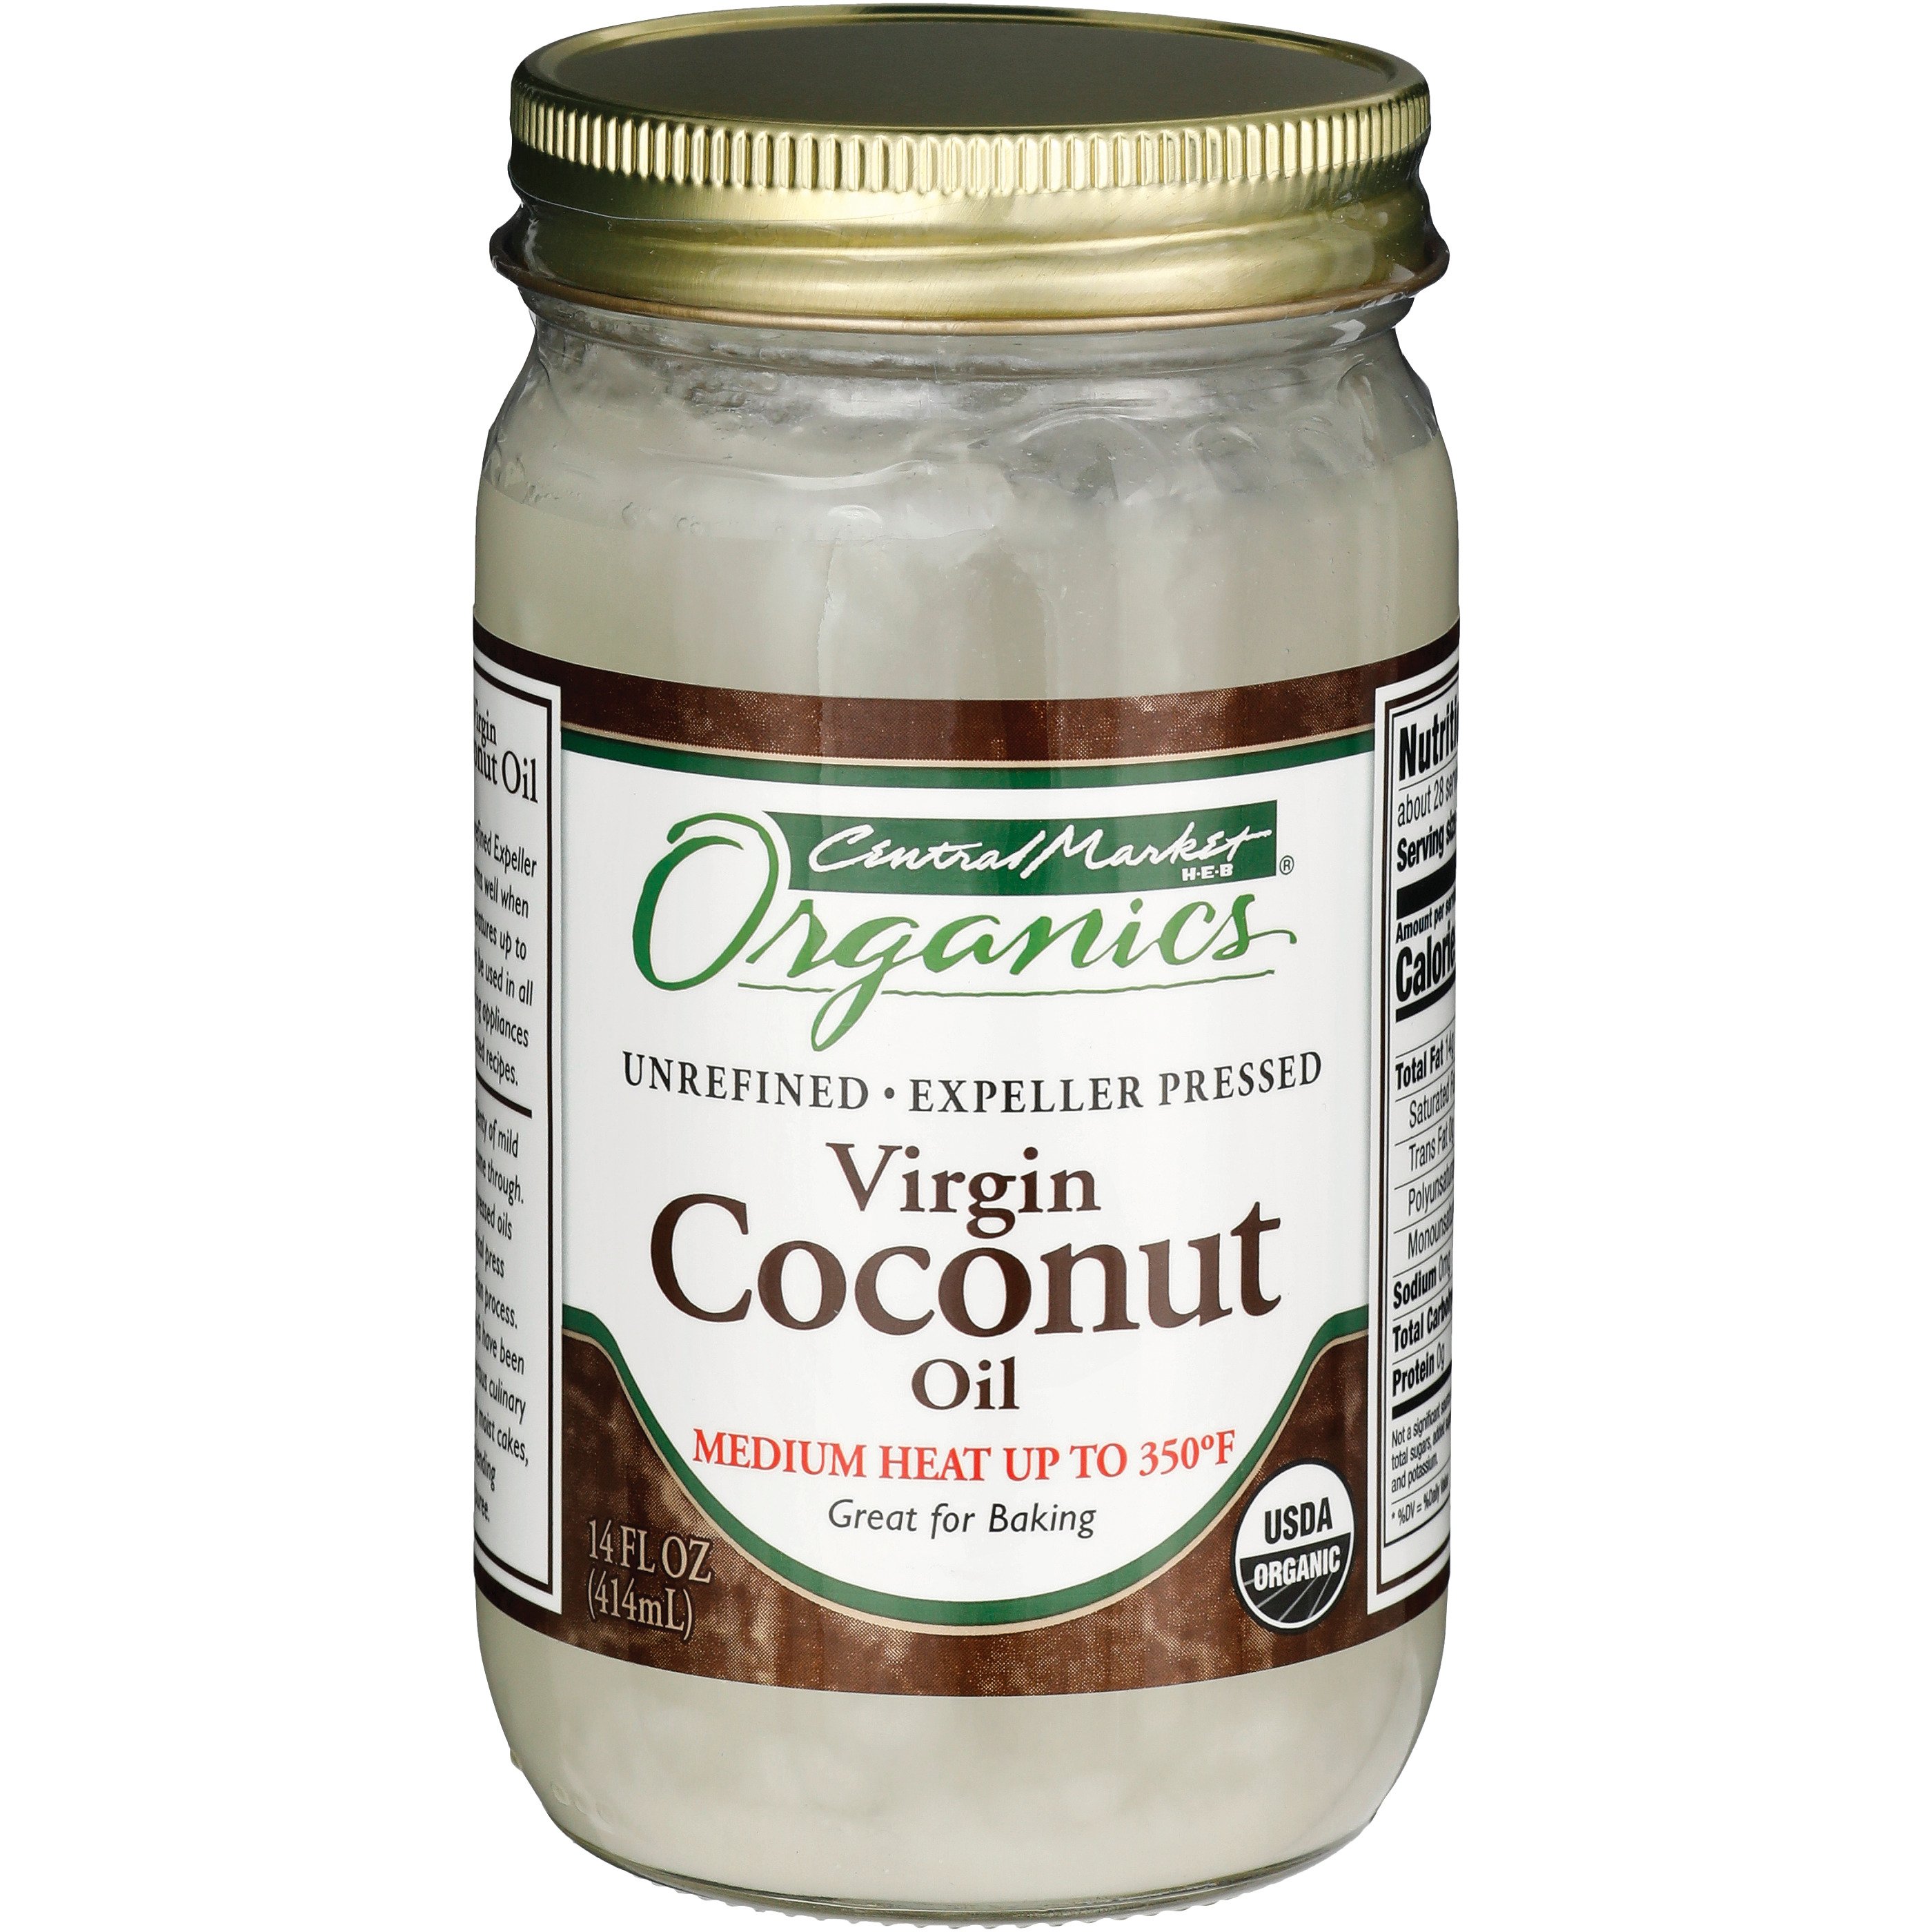 Central Market Organics Unrefined Virgin Coconut Oil - Shop Oils at H-E-B